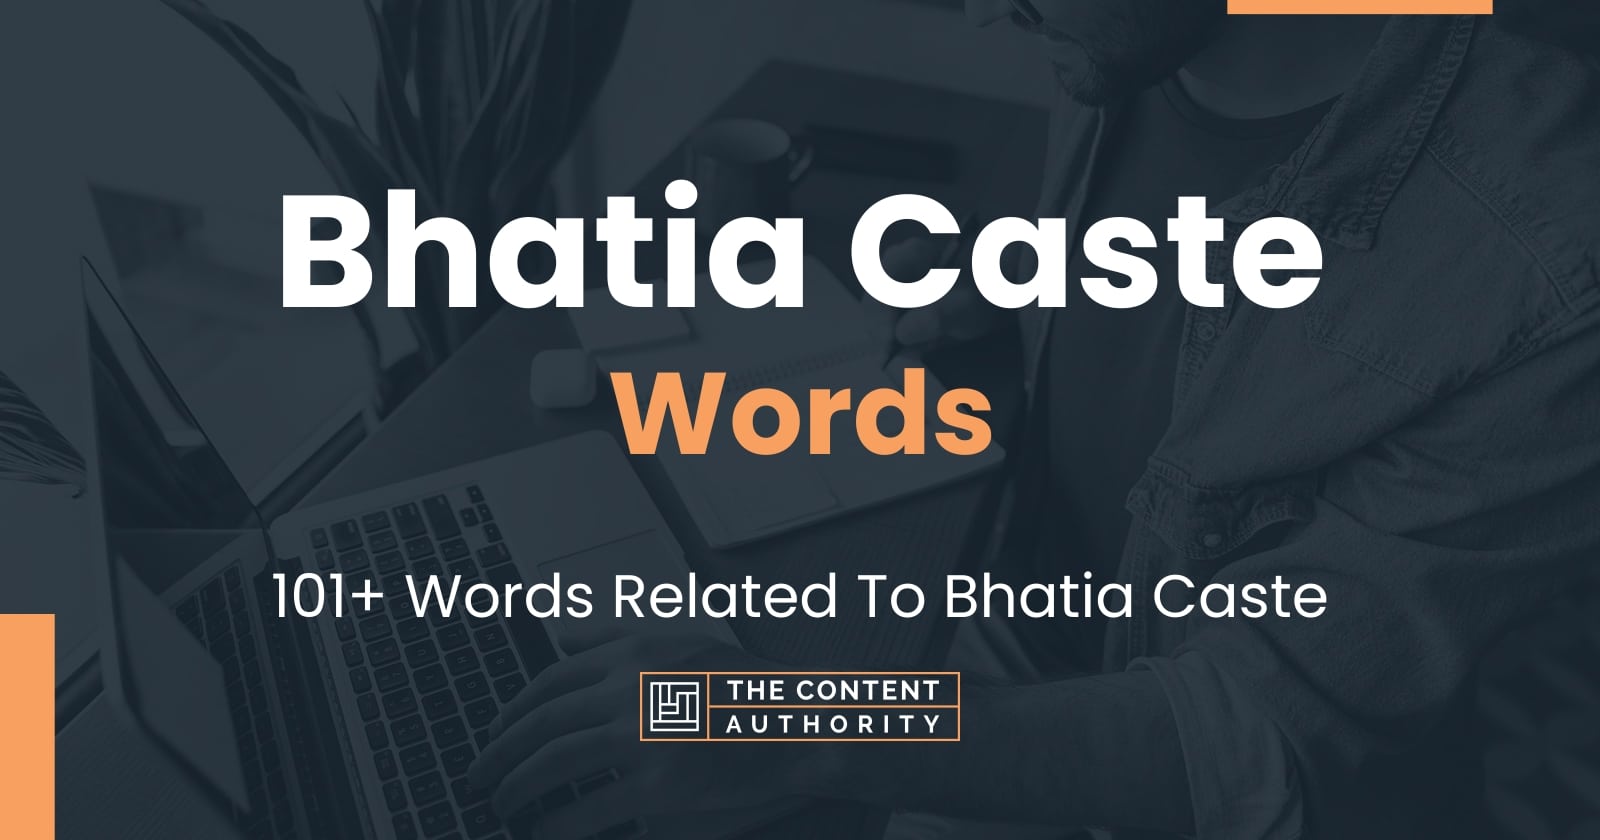 Bhatia Caste Words 101+ Words Related To Bhatia Caste